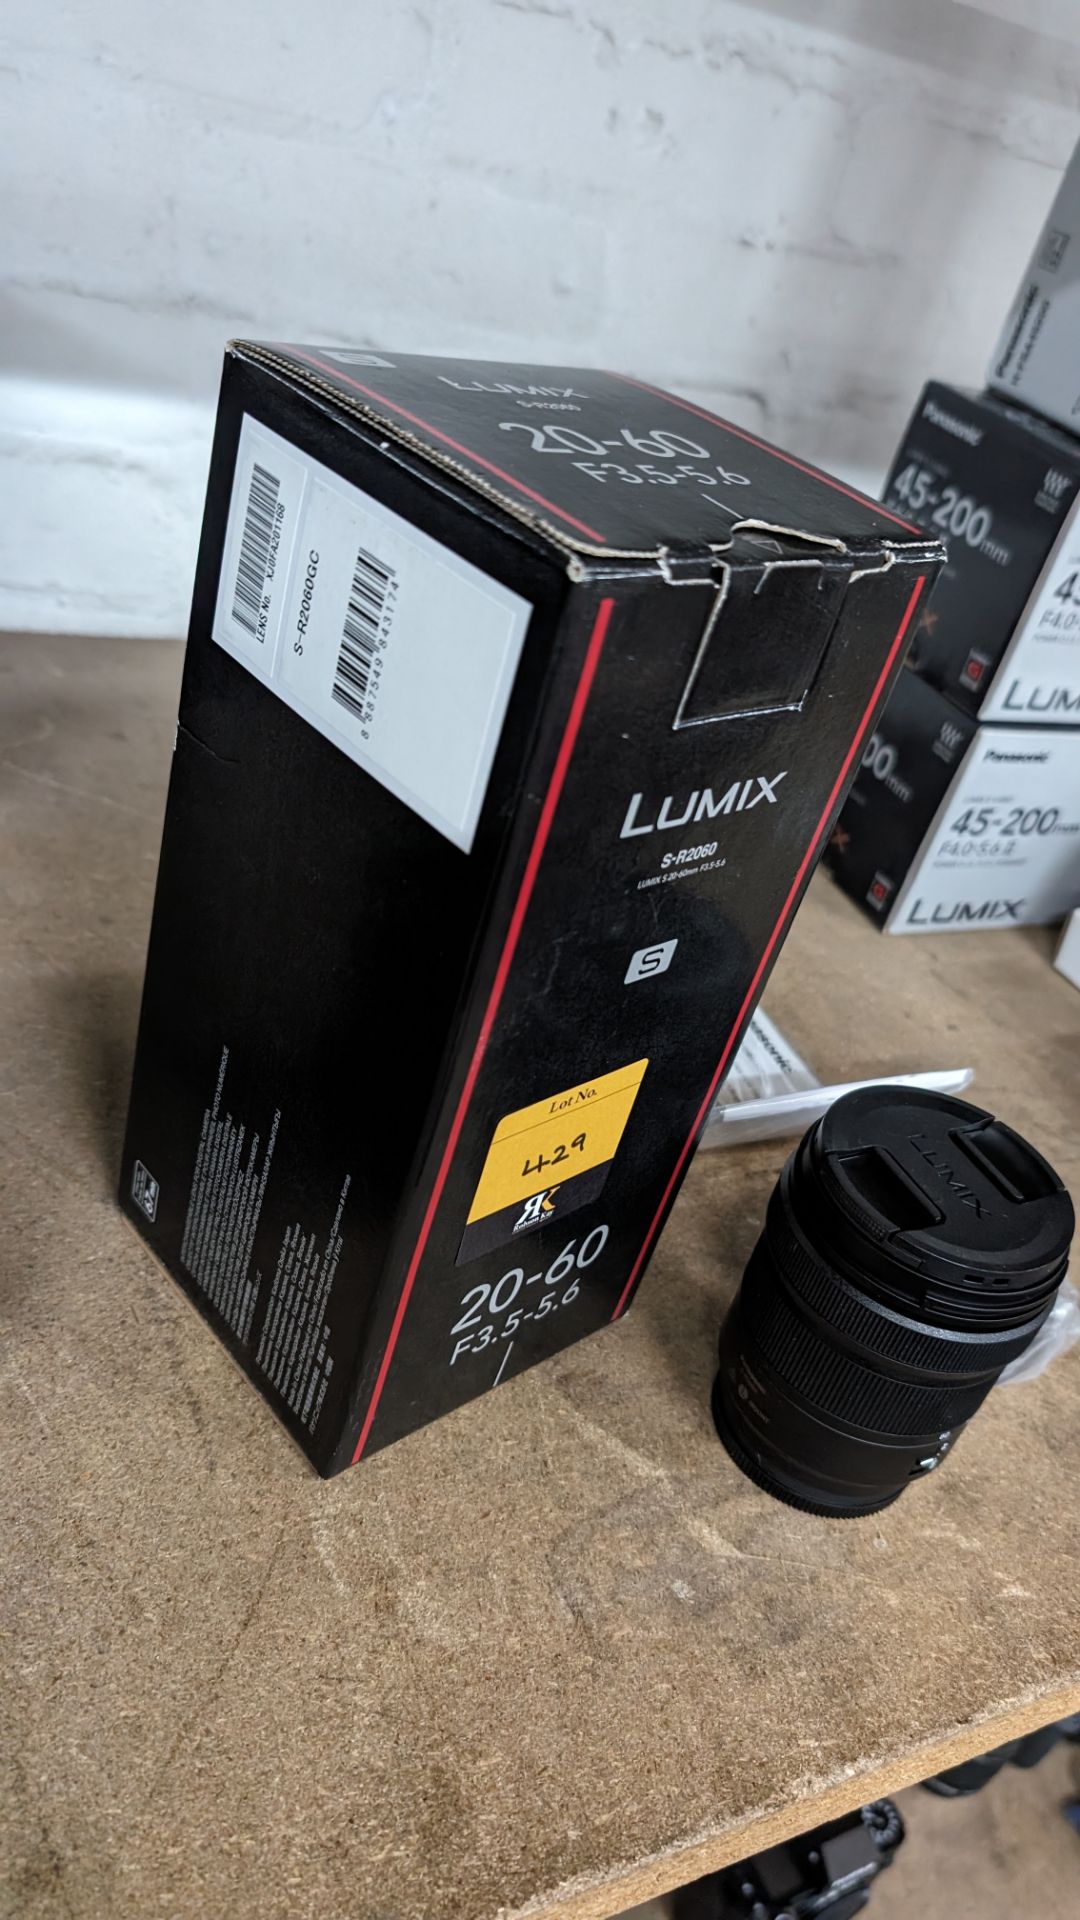 Panasonic Lumix model S-R2060 lens, 20-60mm, f3.5-5.6 - Image 13 of 14